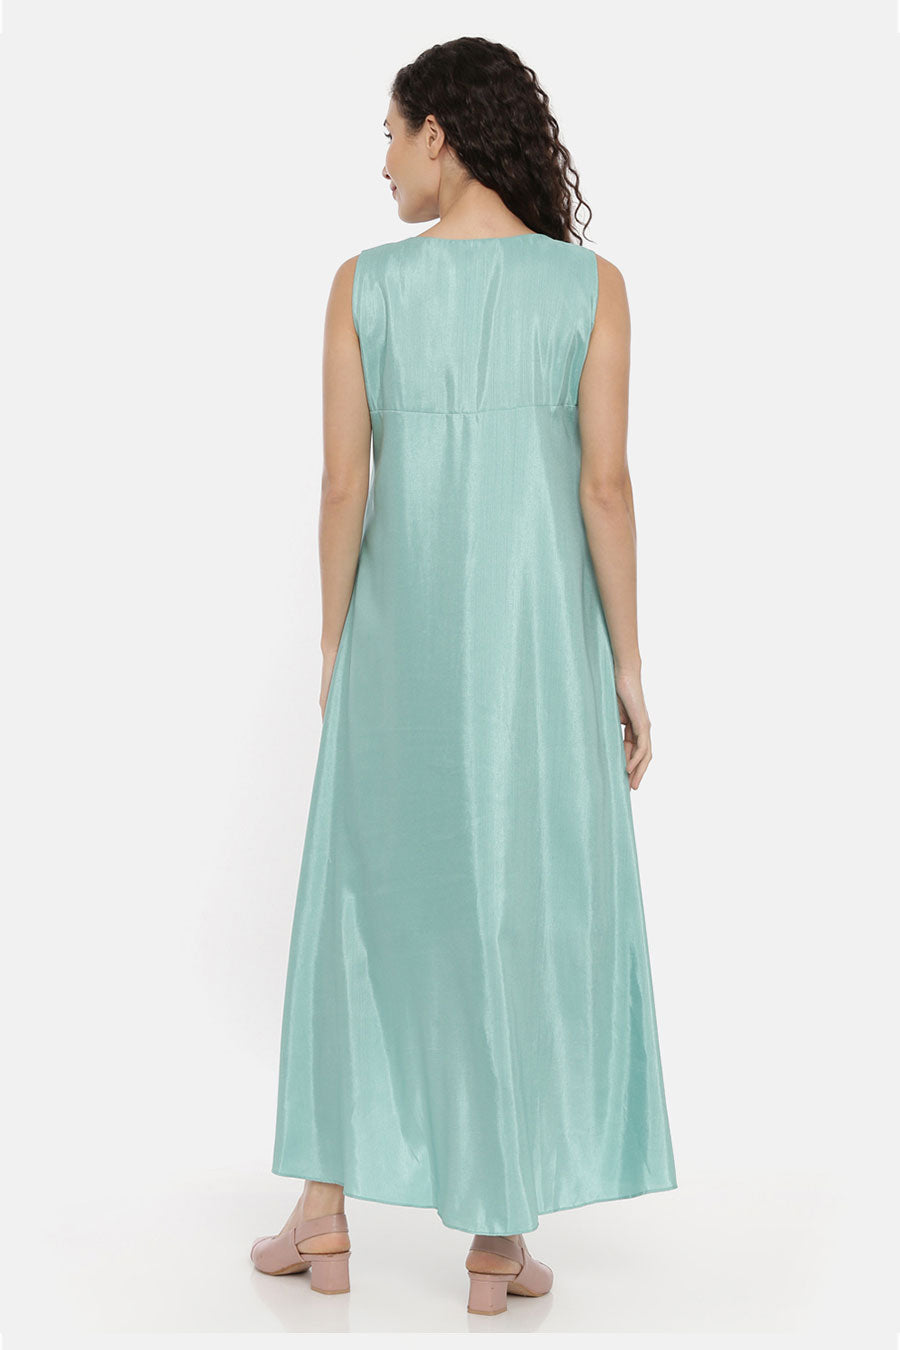 Aqua Blue Asymmetrical Dress